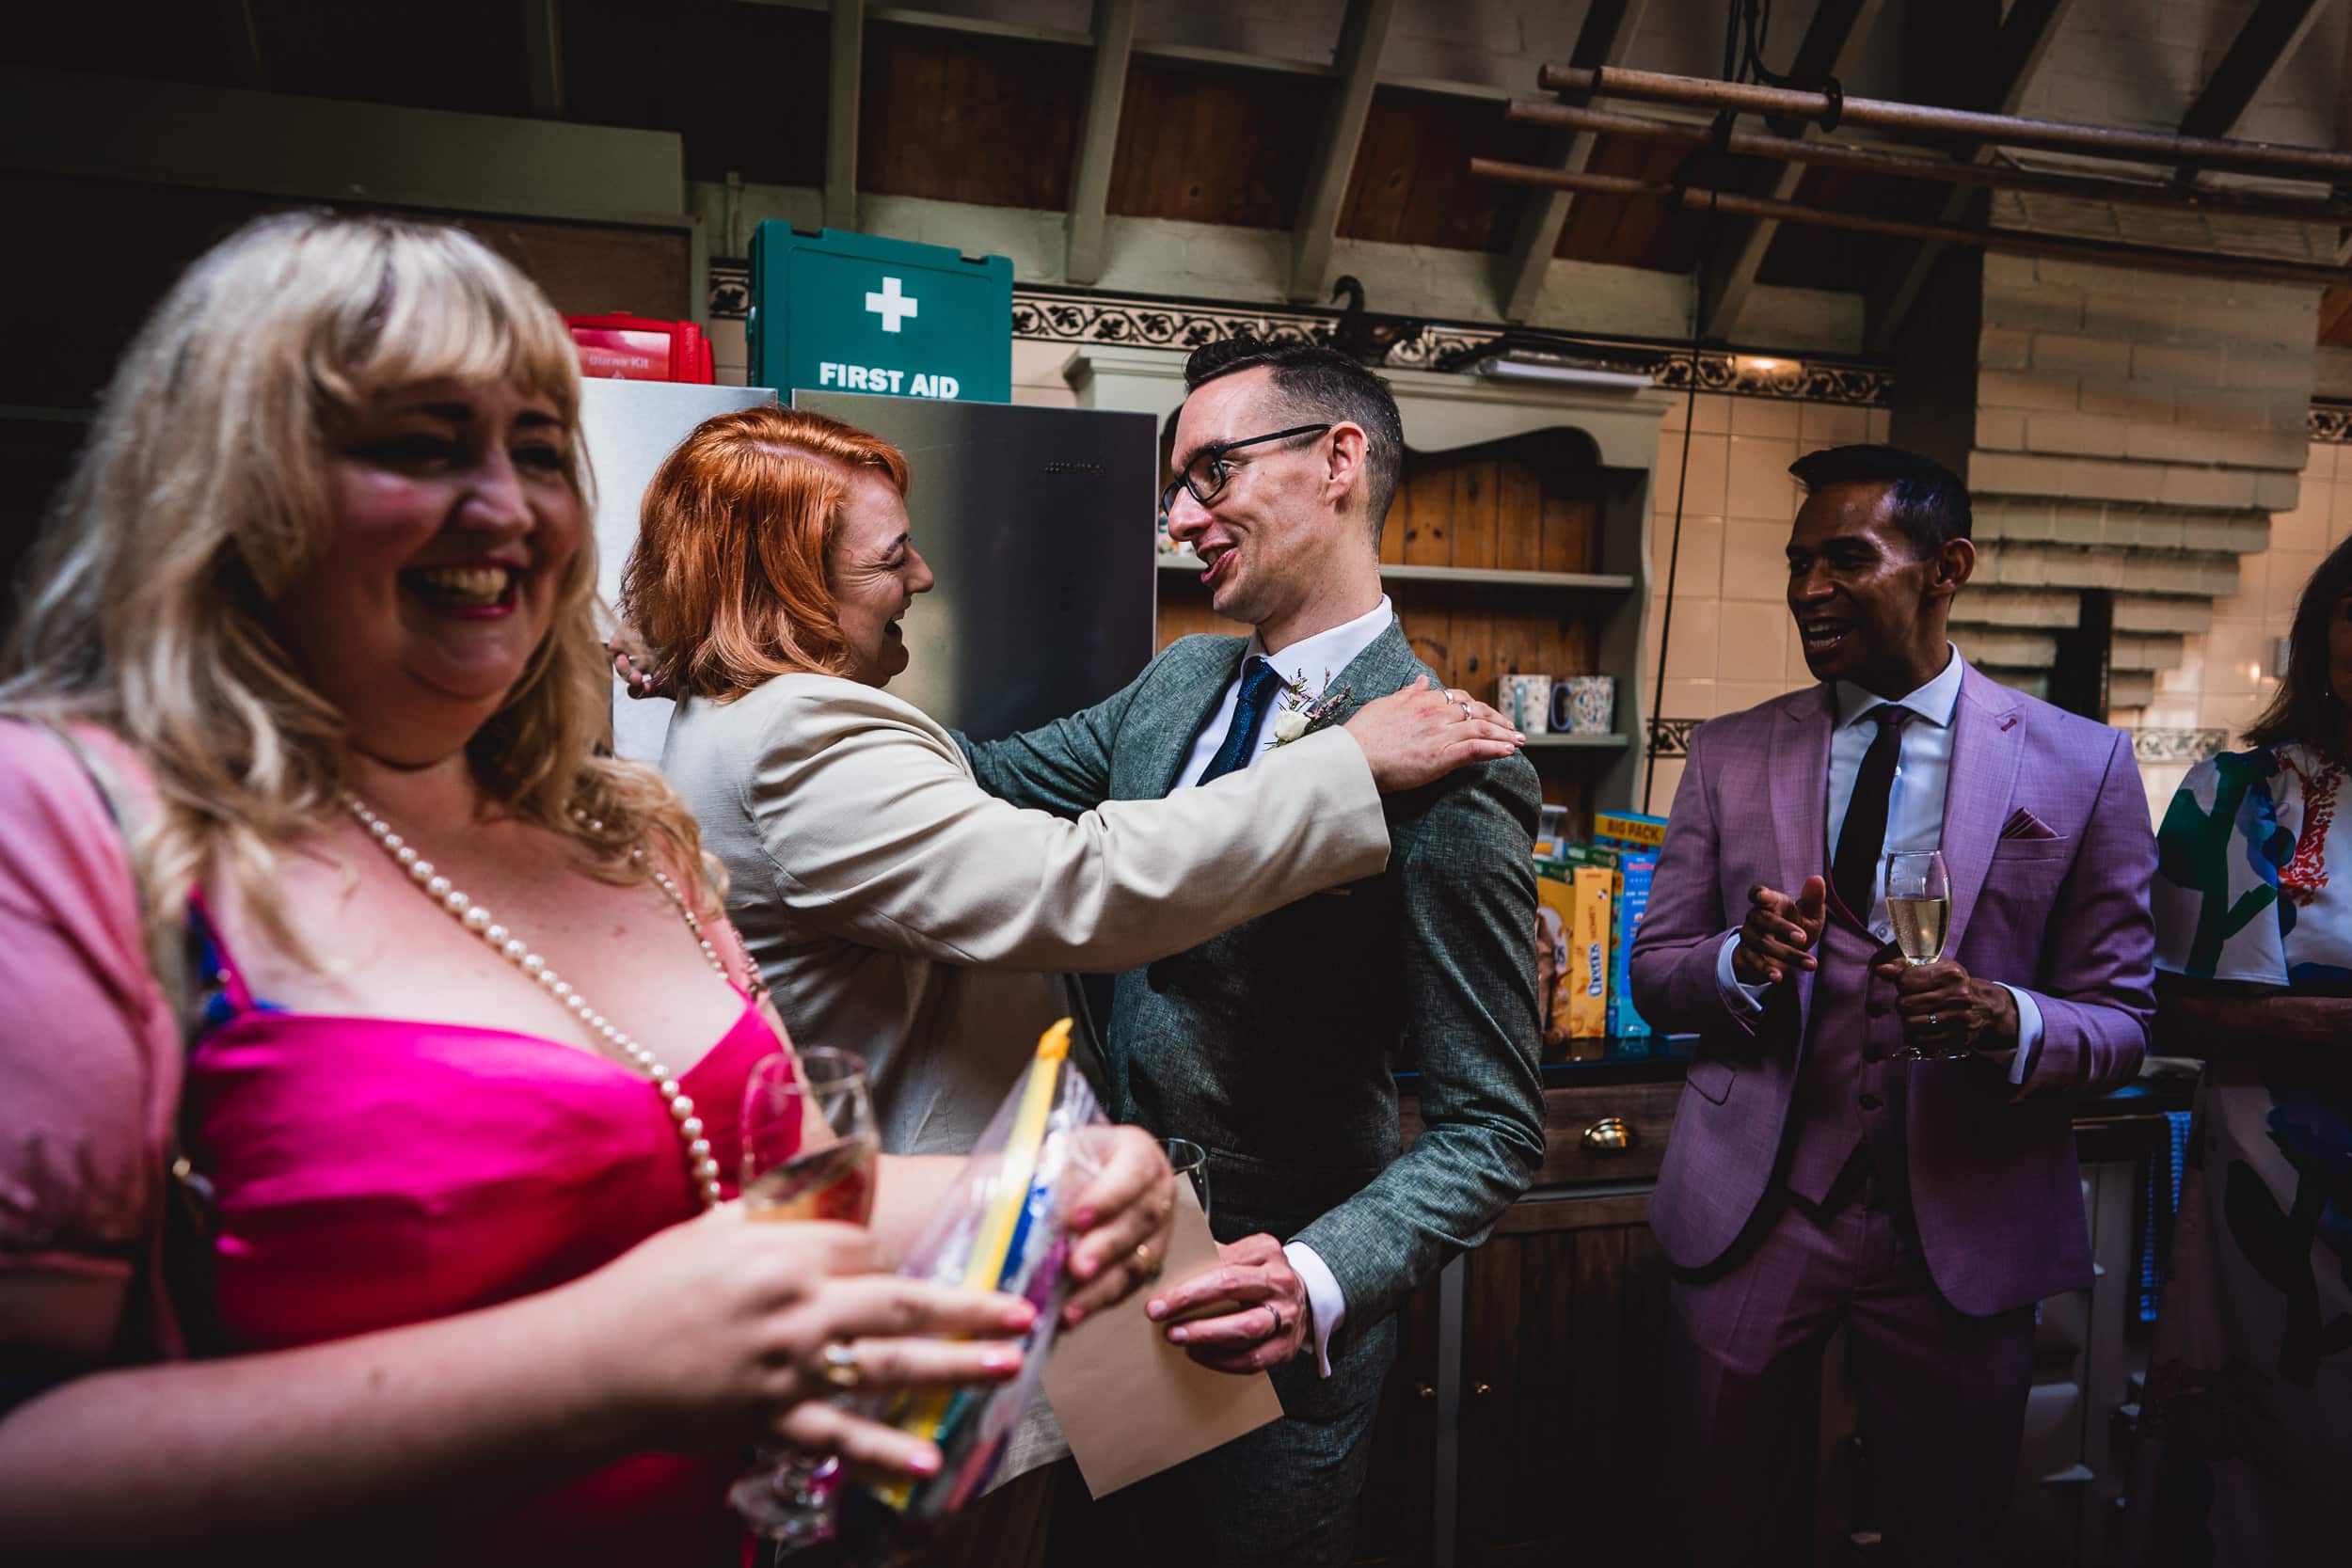 A man is hugging a woman at a Surrey wedding reception.